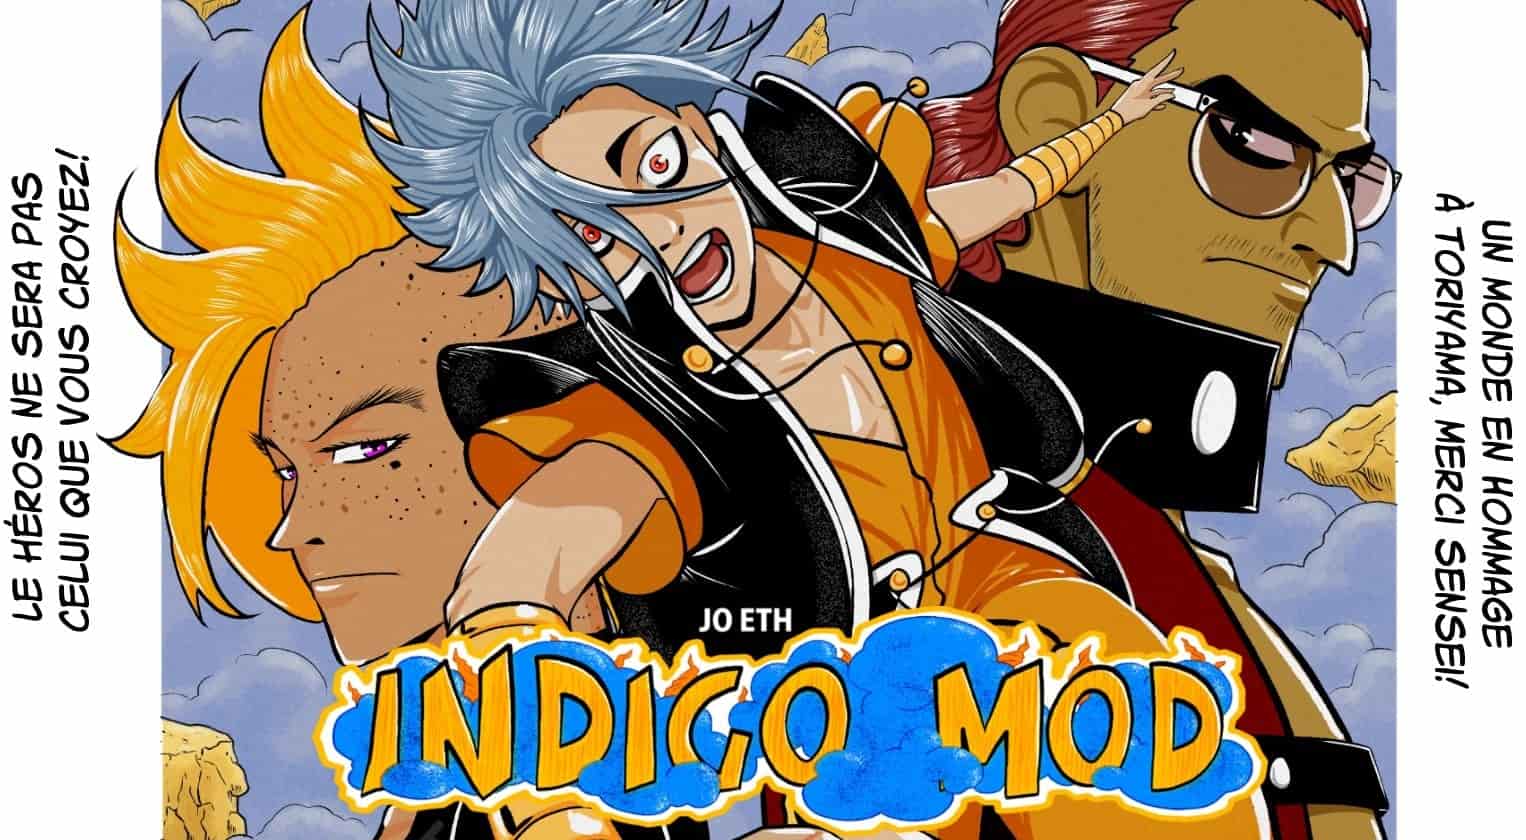 Indigo mod - Scan manga gratuit en ligne manga scan gratuit bayday